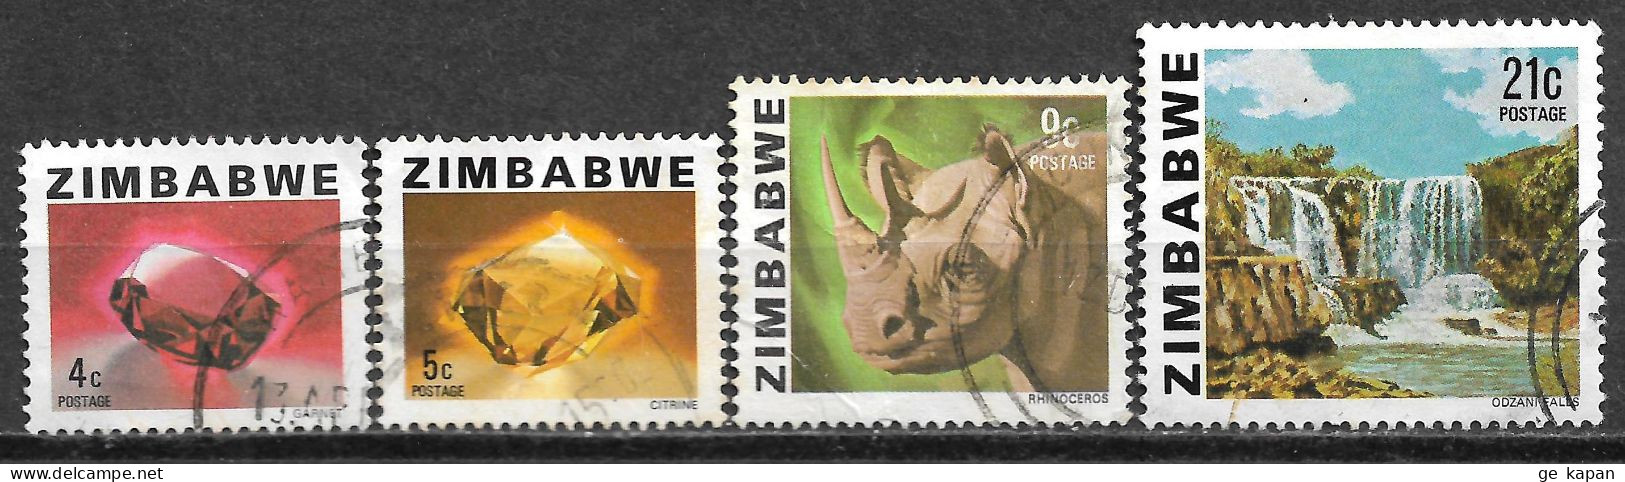 1980 ZIMBABWE Set Of 4 Used Stamps (Michel # 229,230,232,237) CV €1.70 - Zimbabwe (1980-...)